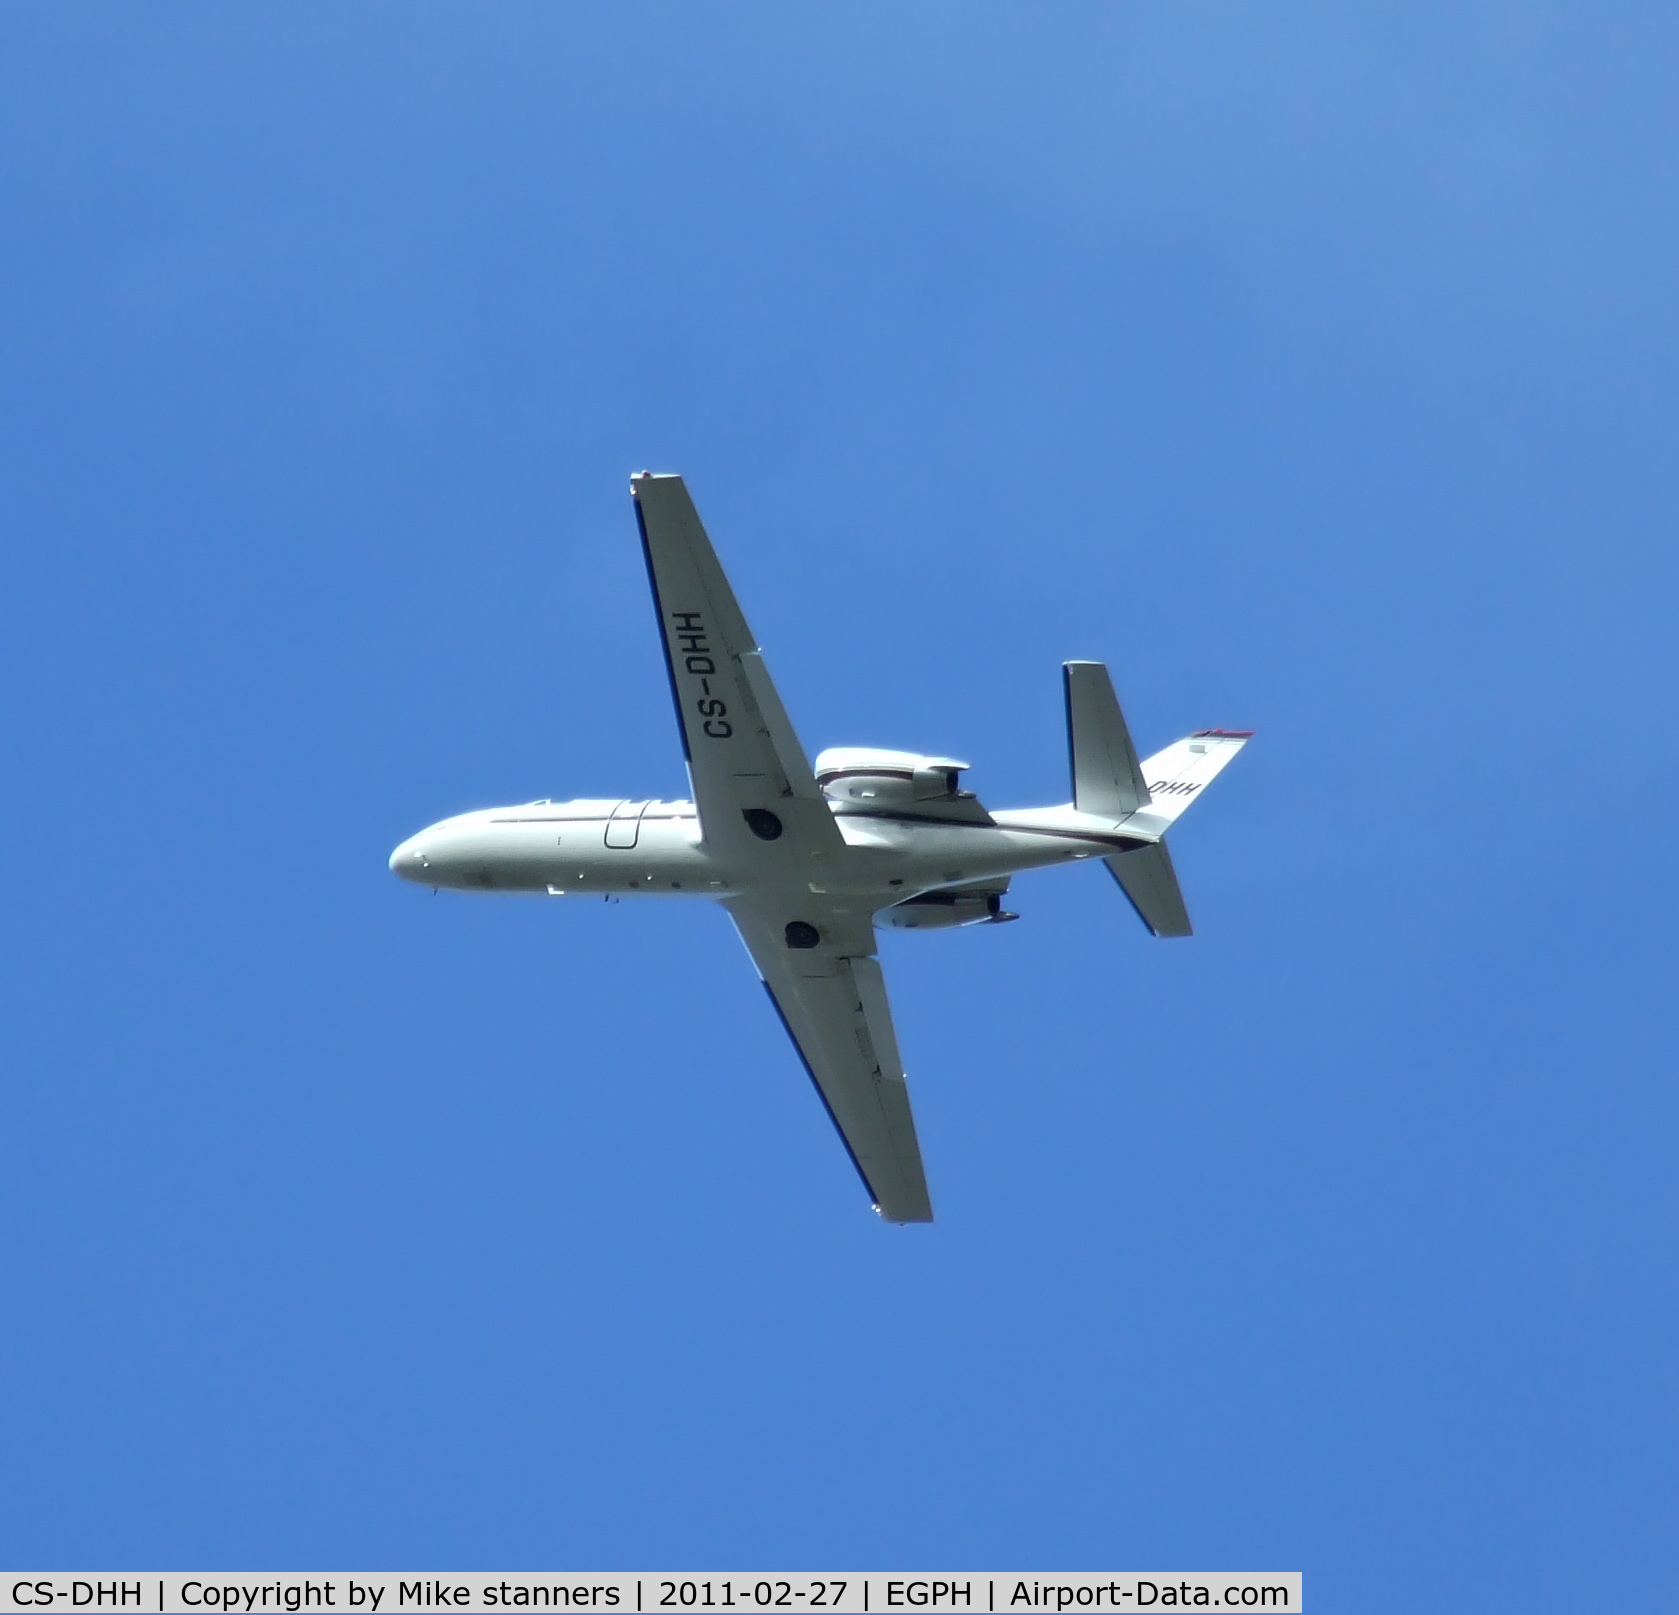 CS-DHH, 2002 Cessna 550 Citation Bravo C/N 550-1043, Netjets Citation bravo departs runway 24